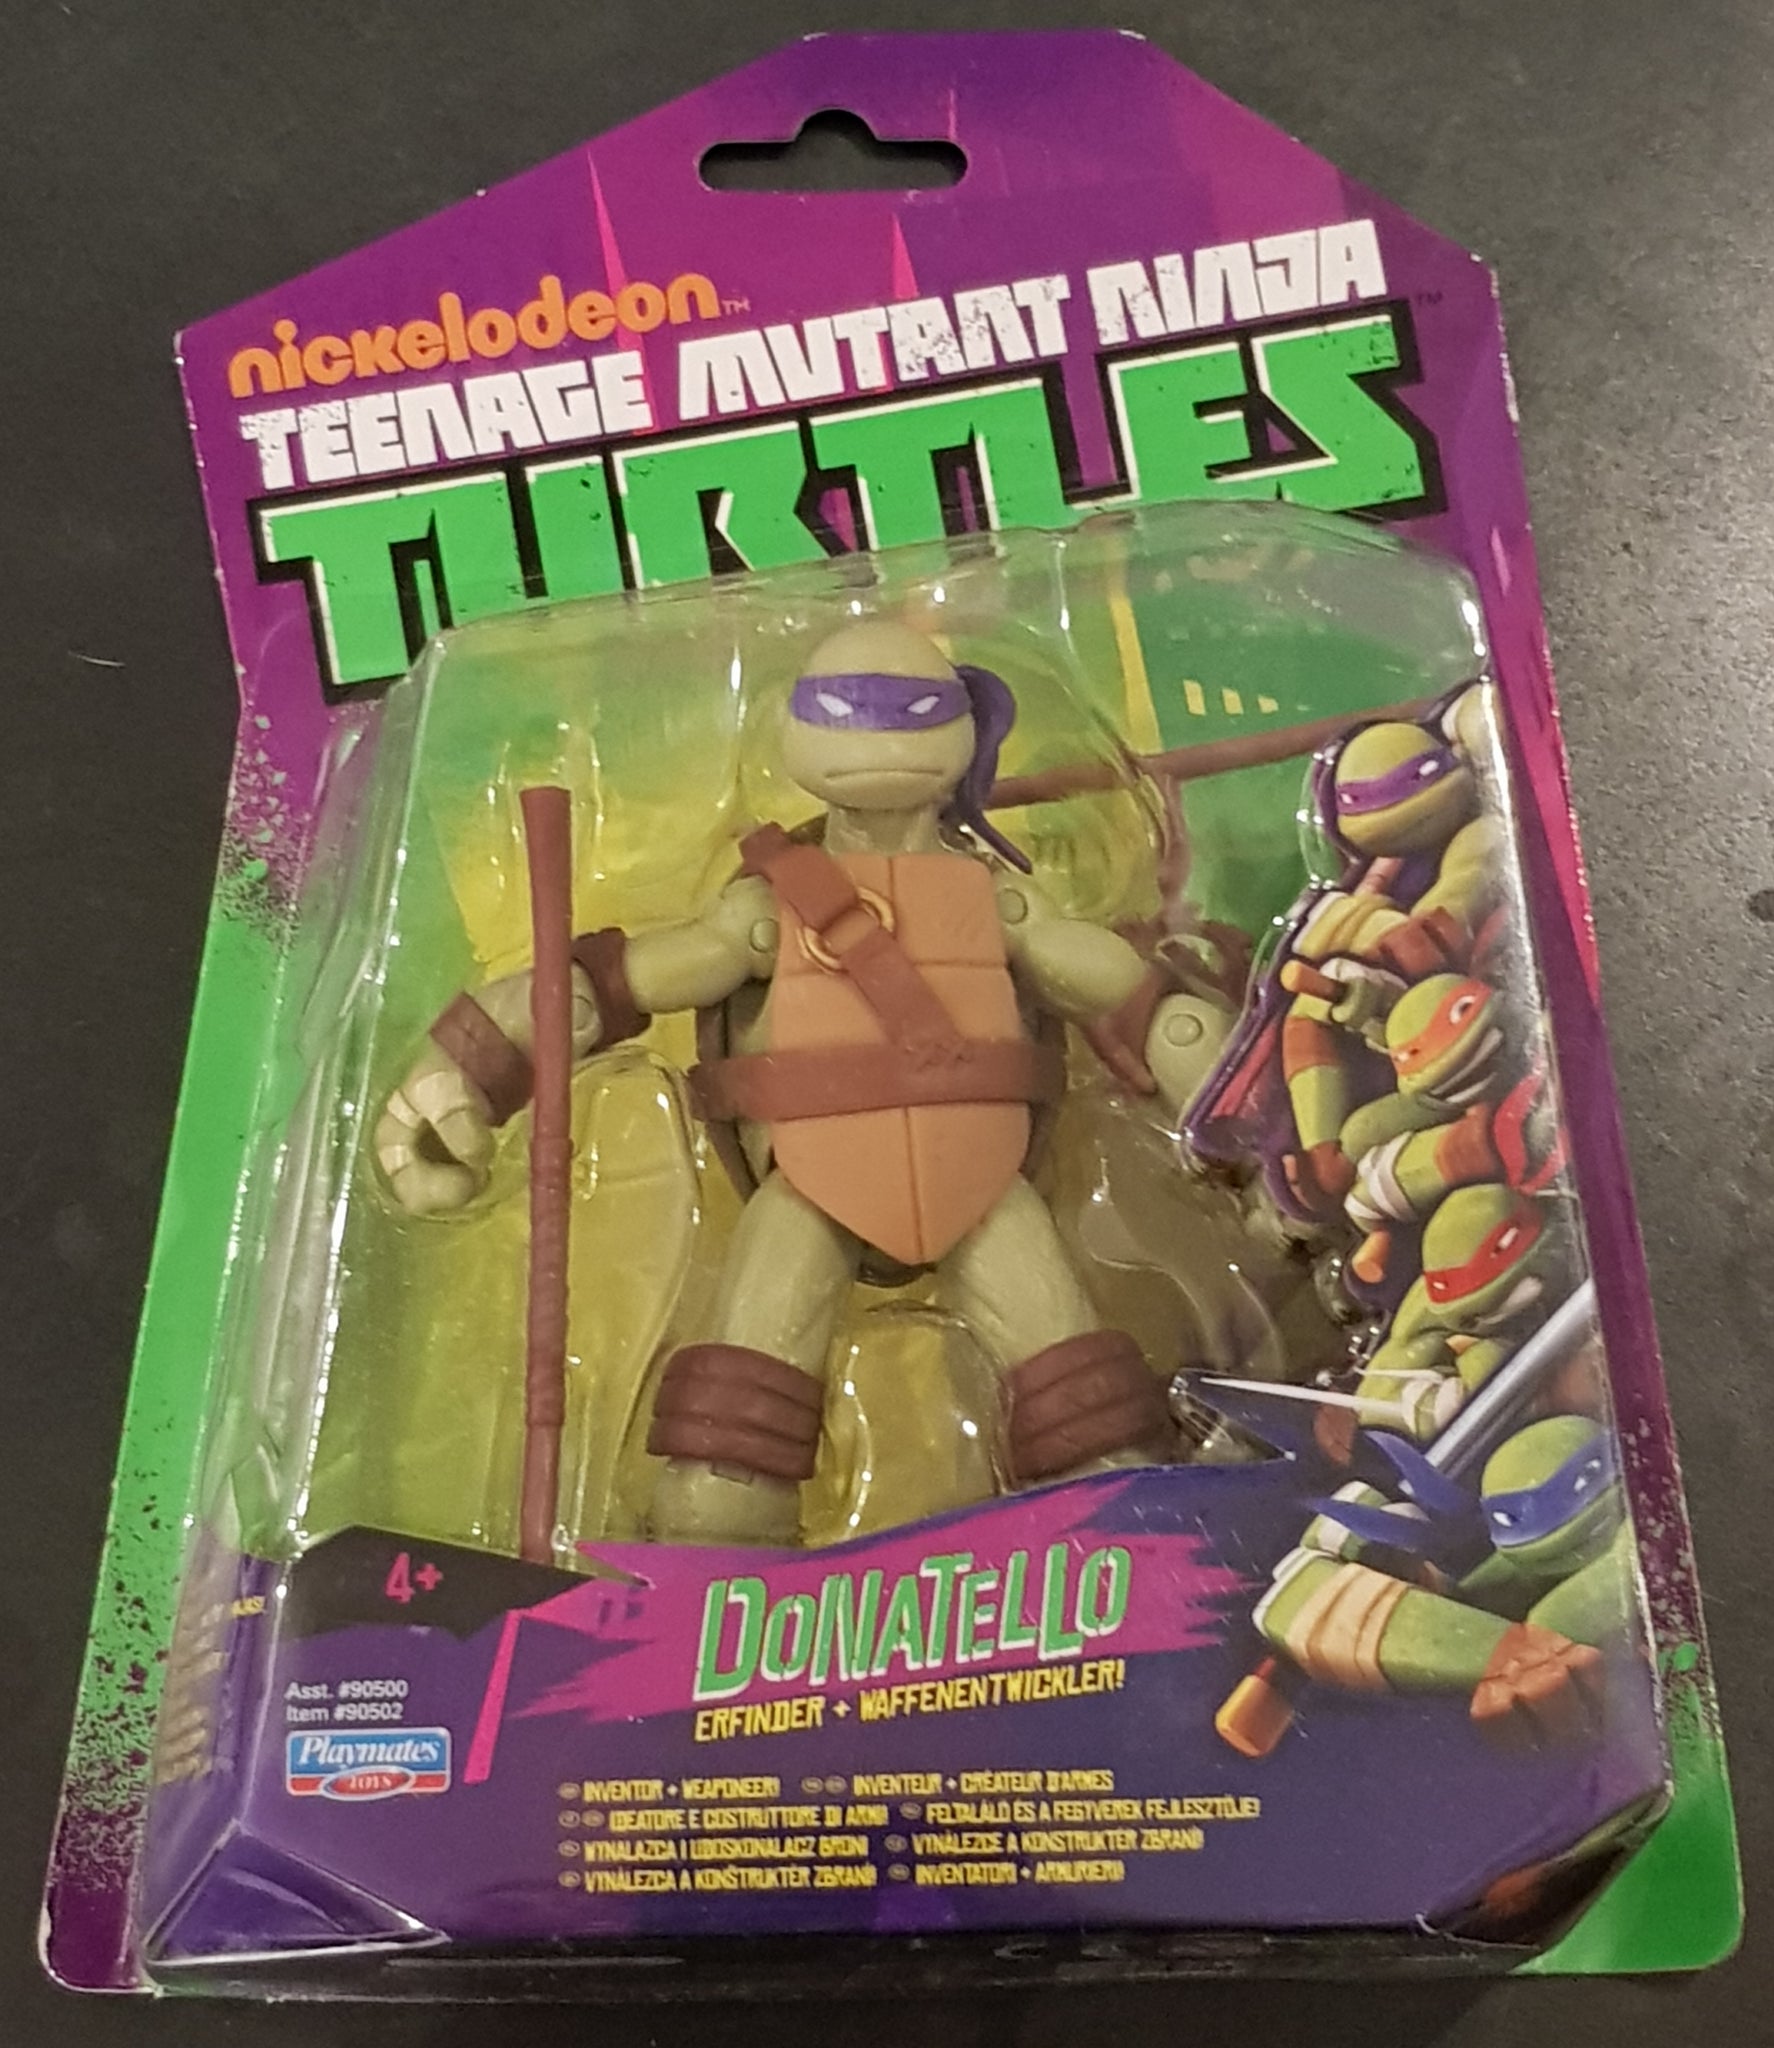 Teenage Mutant Ninja Turtles Donatello Inventor and Weaponeer Action Figure